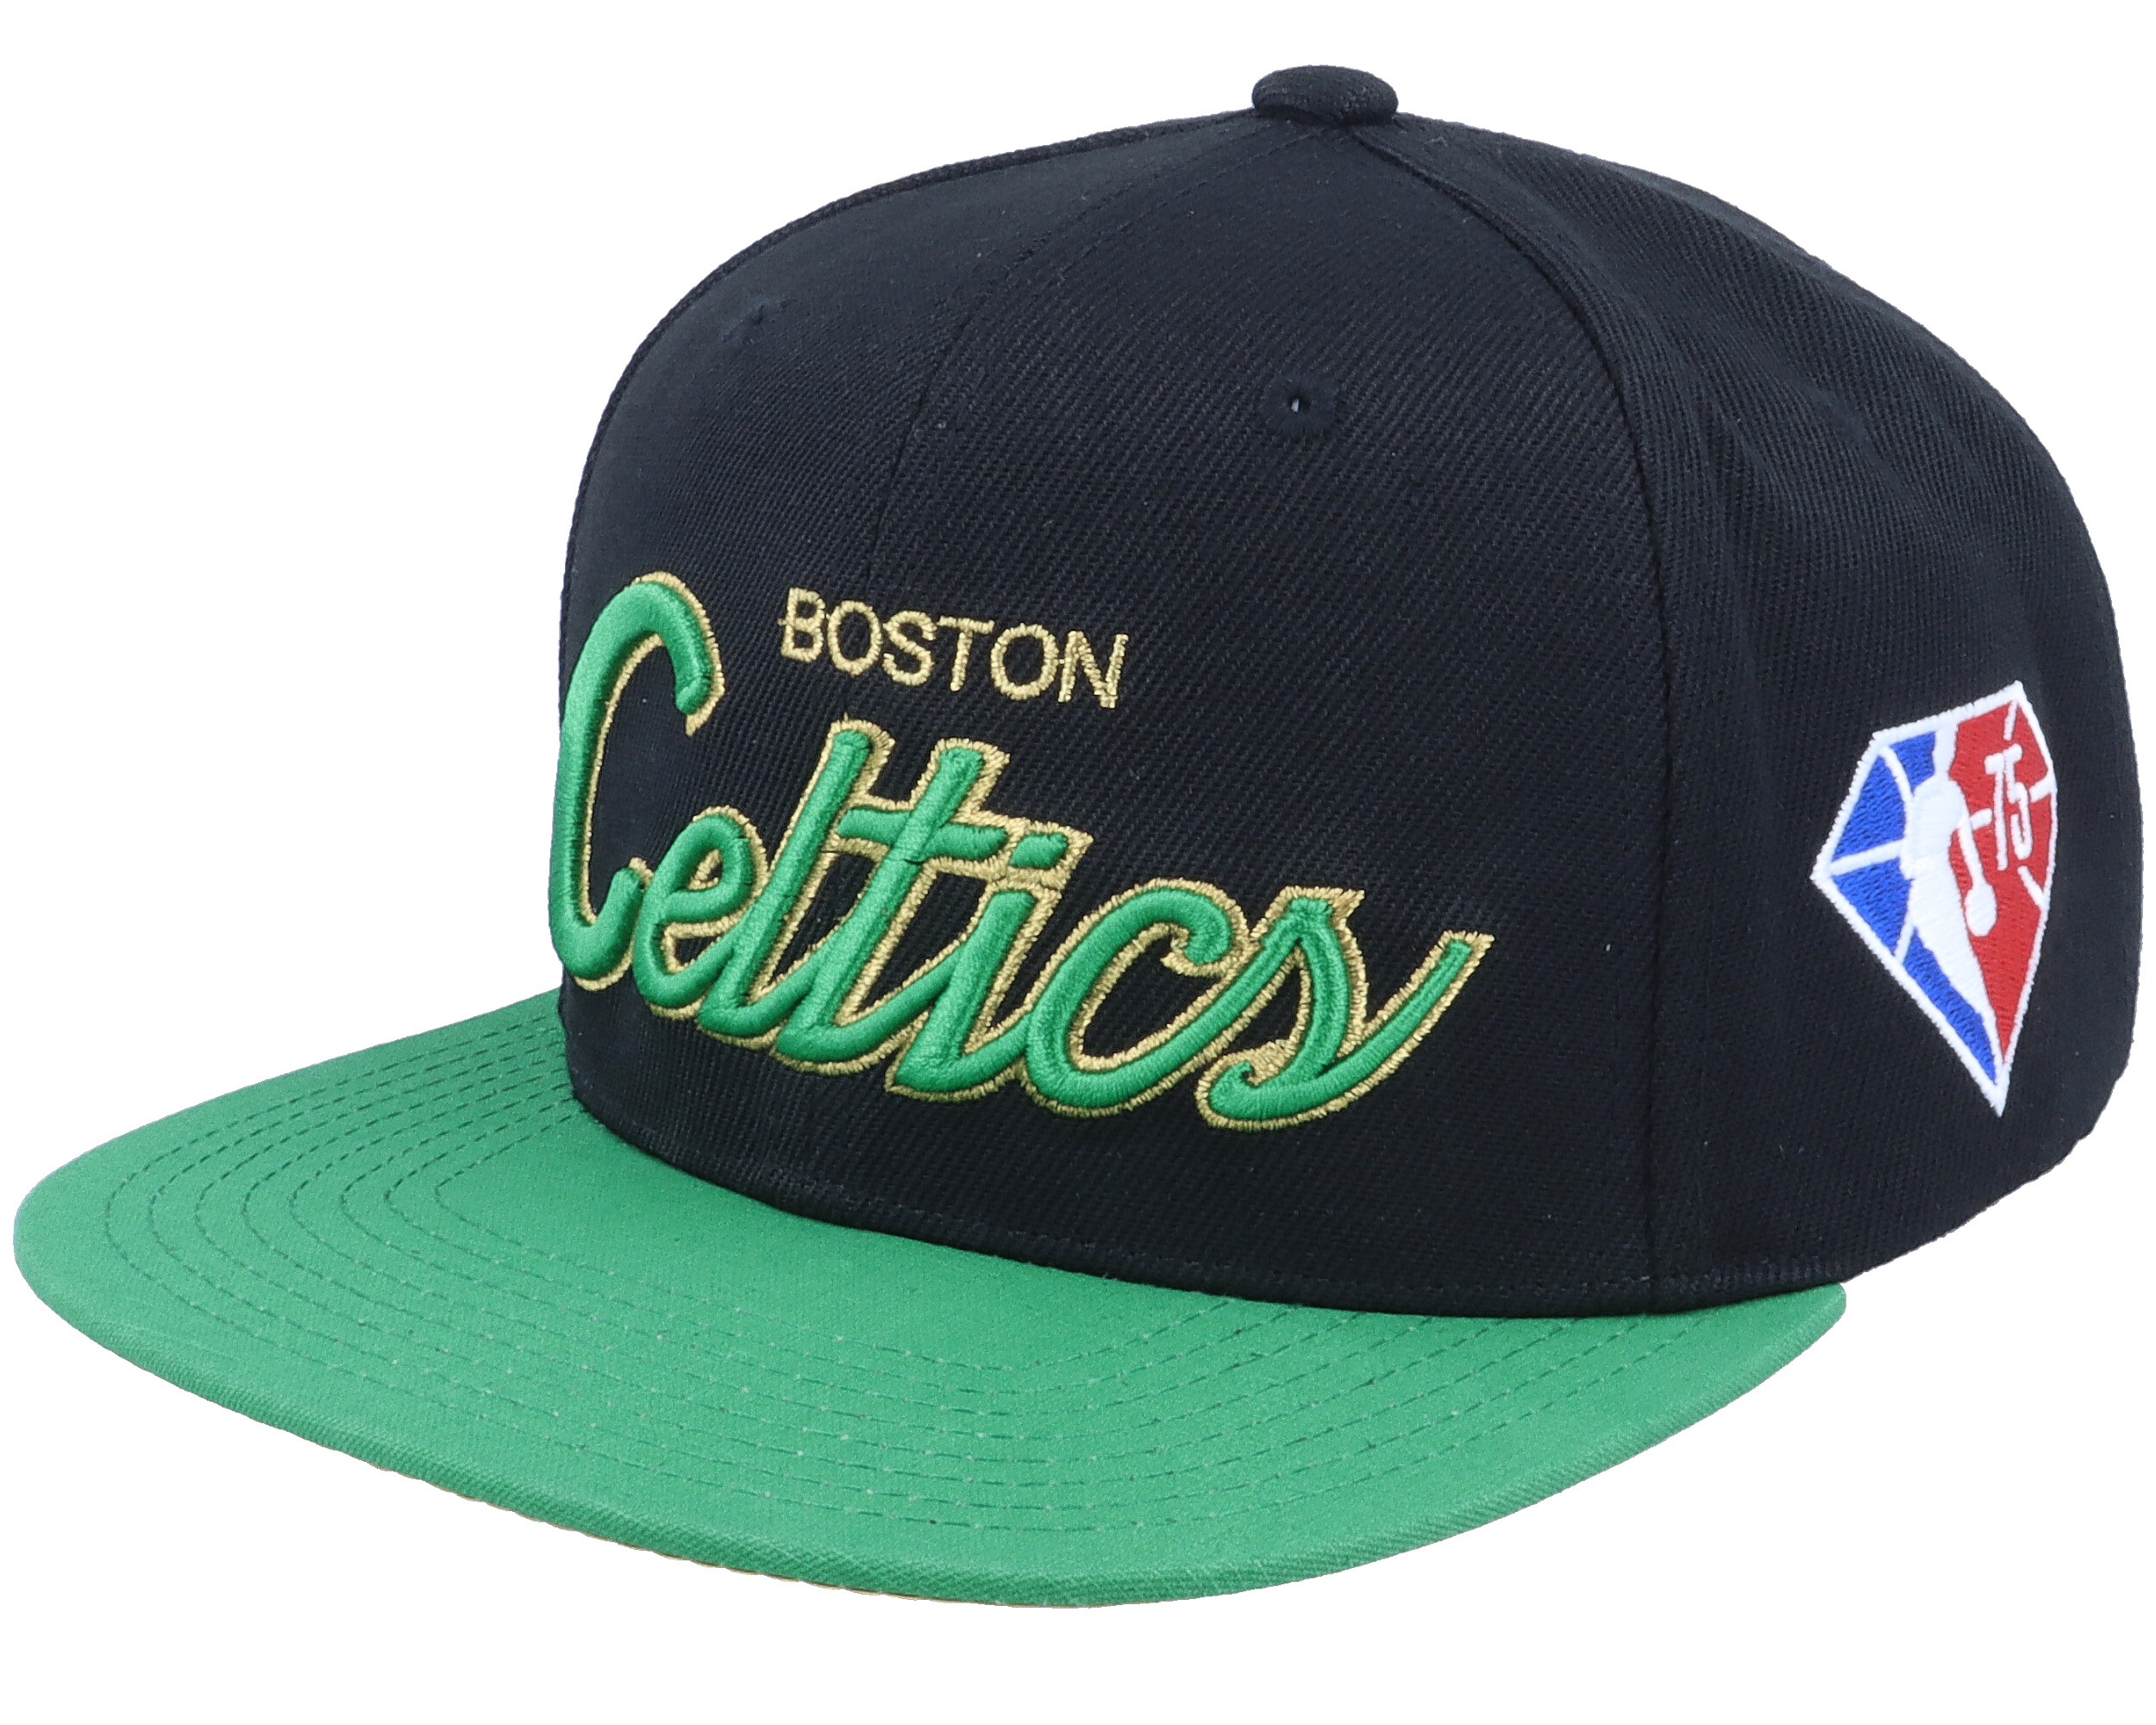 Boston Celtics 75th Gold Nba Black Snapback Mitchell & Ness cap